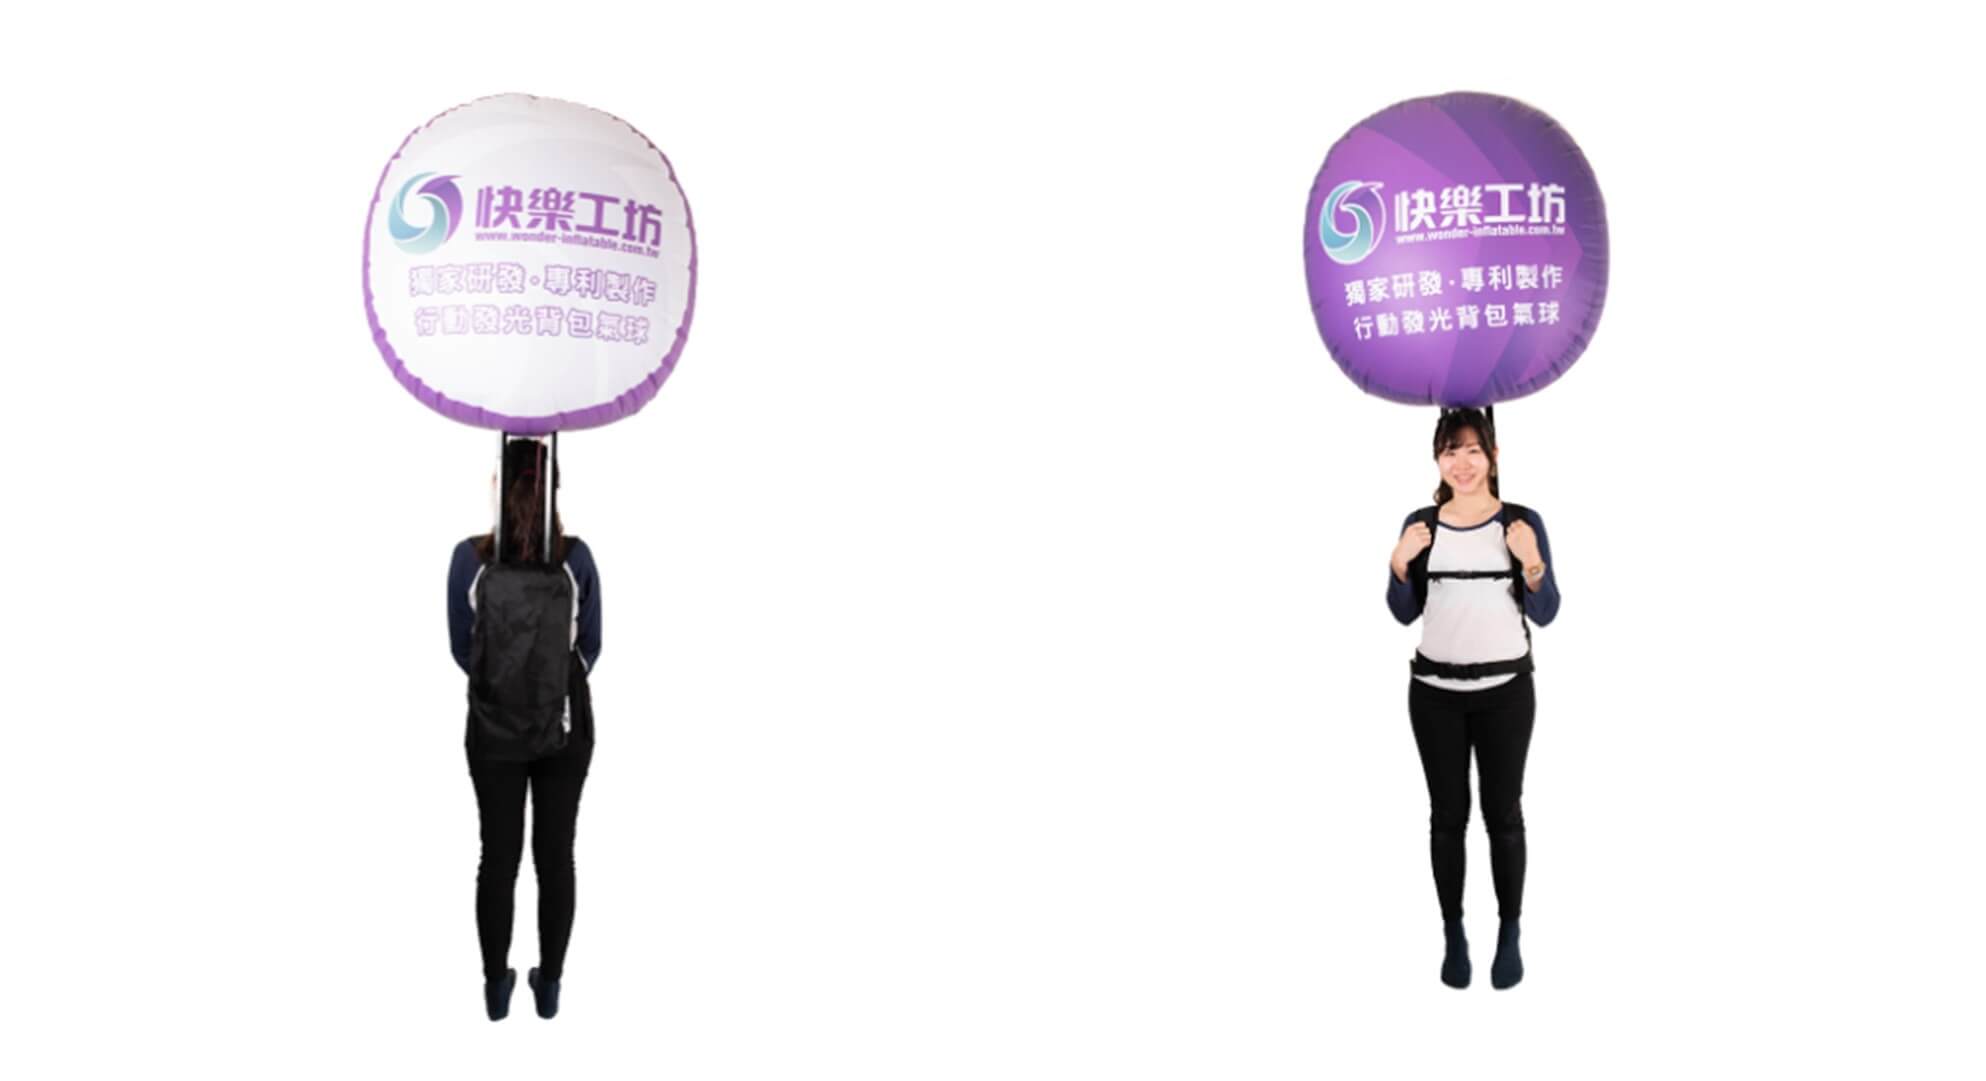 Backpack Advertising Balloon2